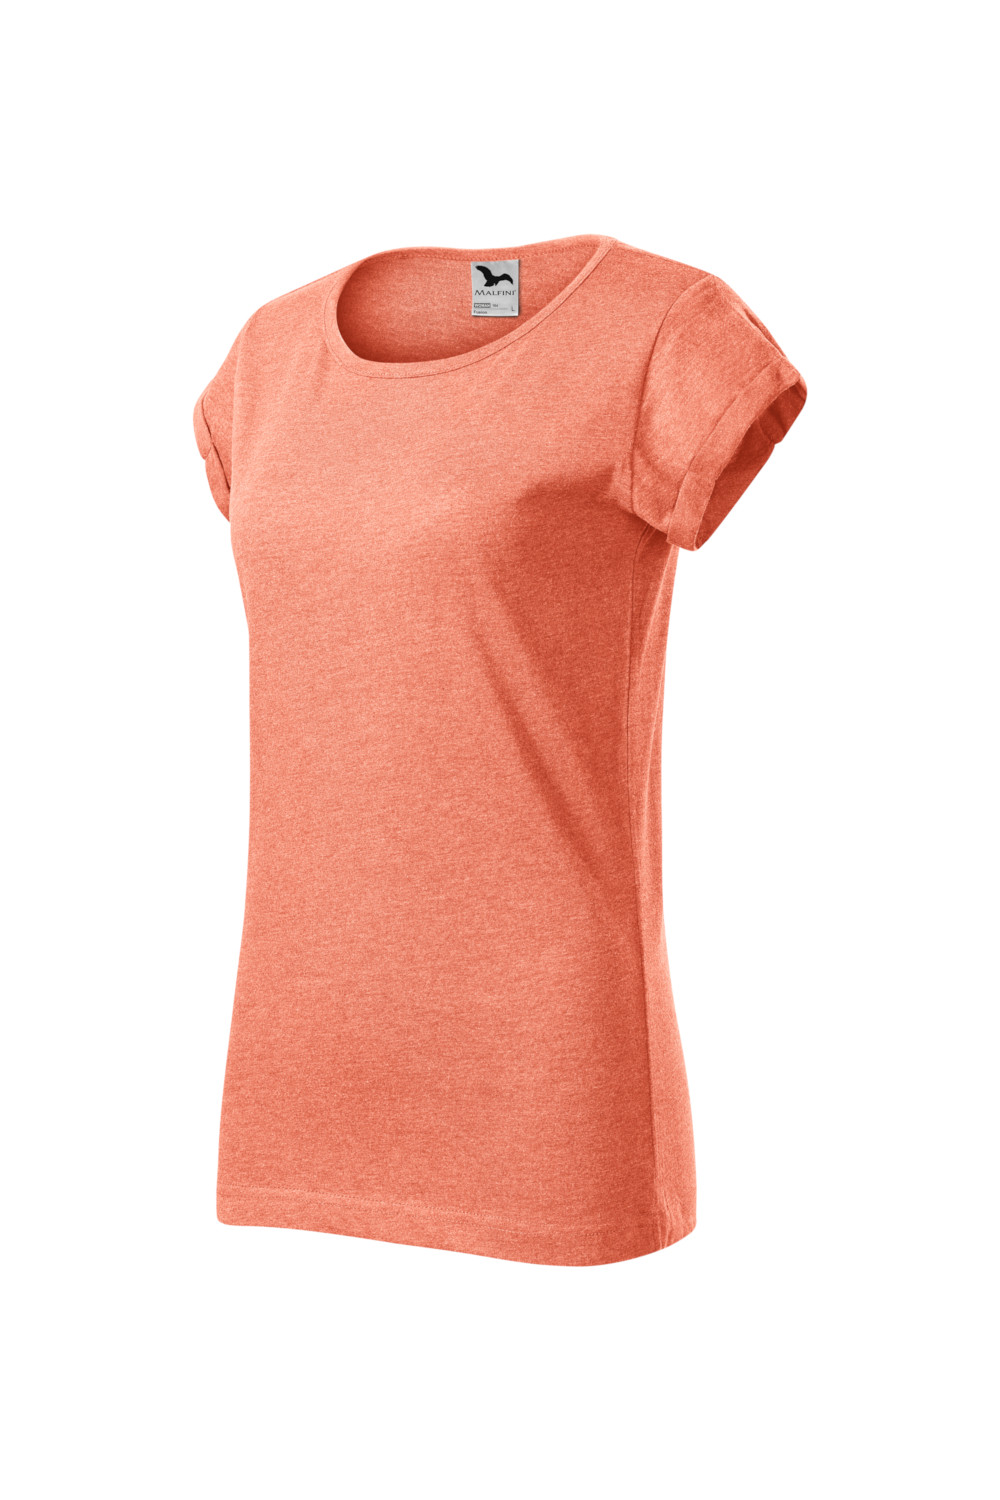 Koszulka damska melanżowa FUSION 164 koszulki / T-shirt sunset melanż M9